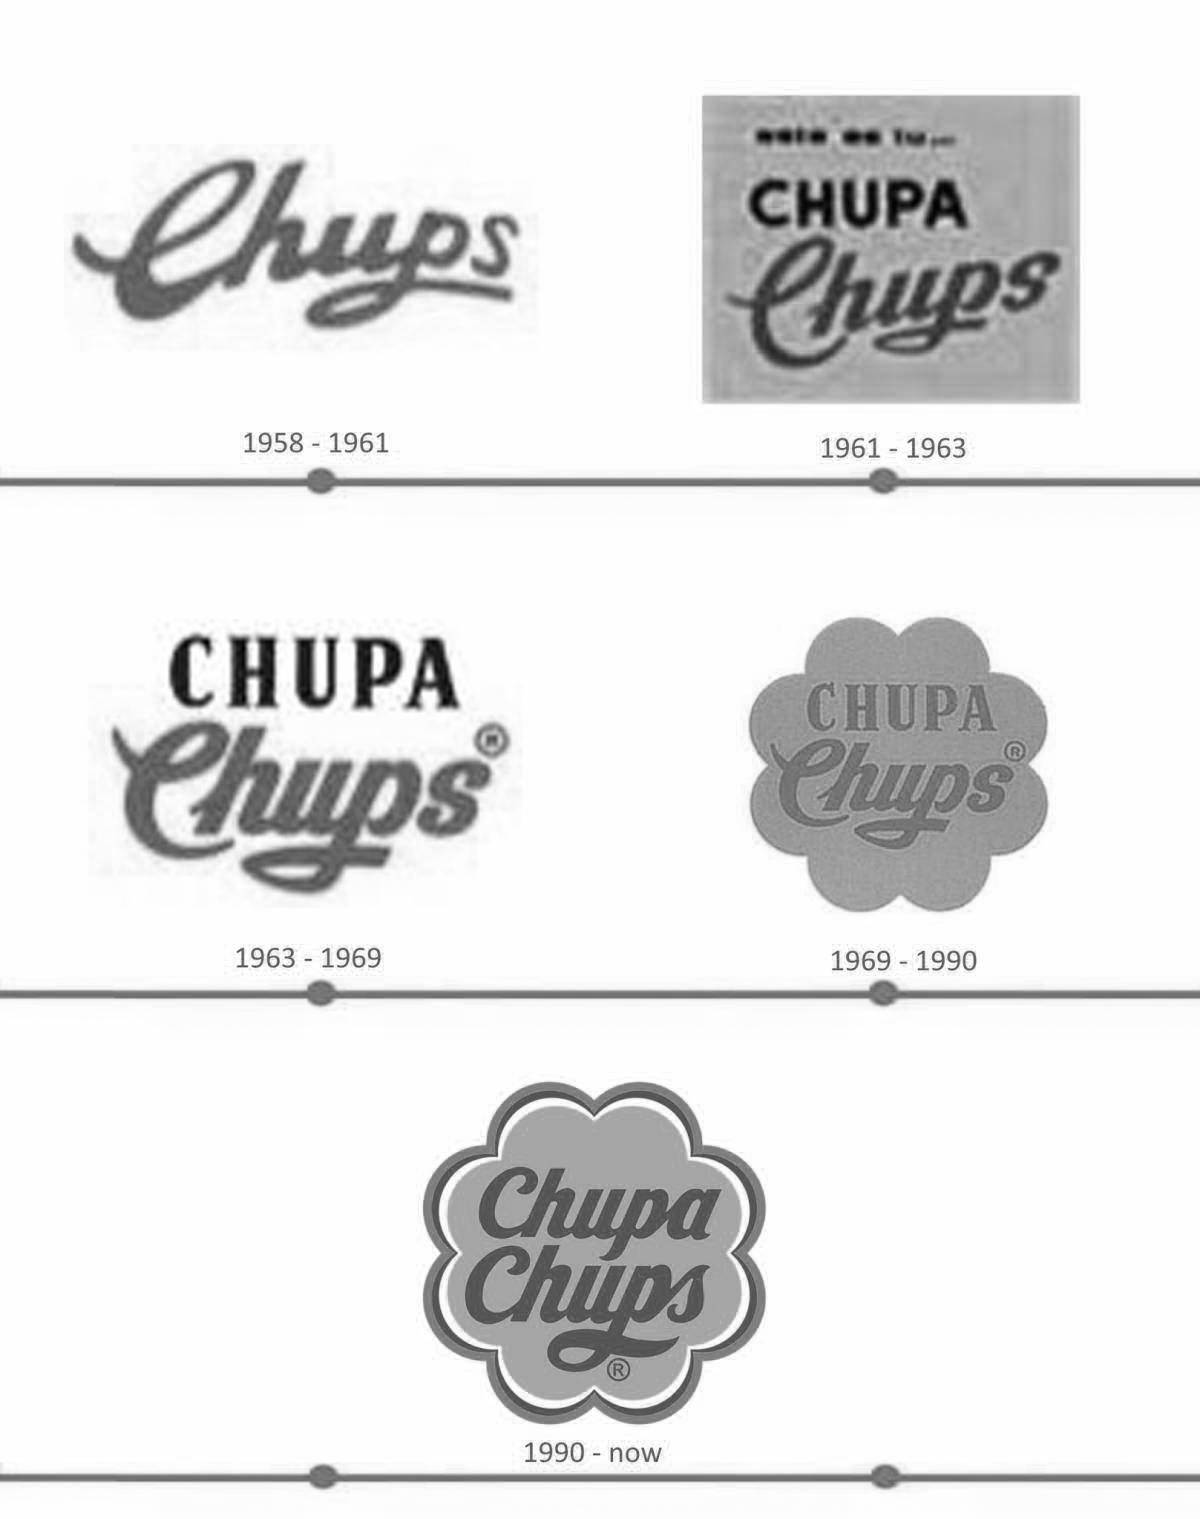 Attractive coloring page with chupa chups logo